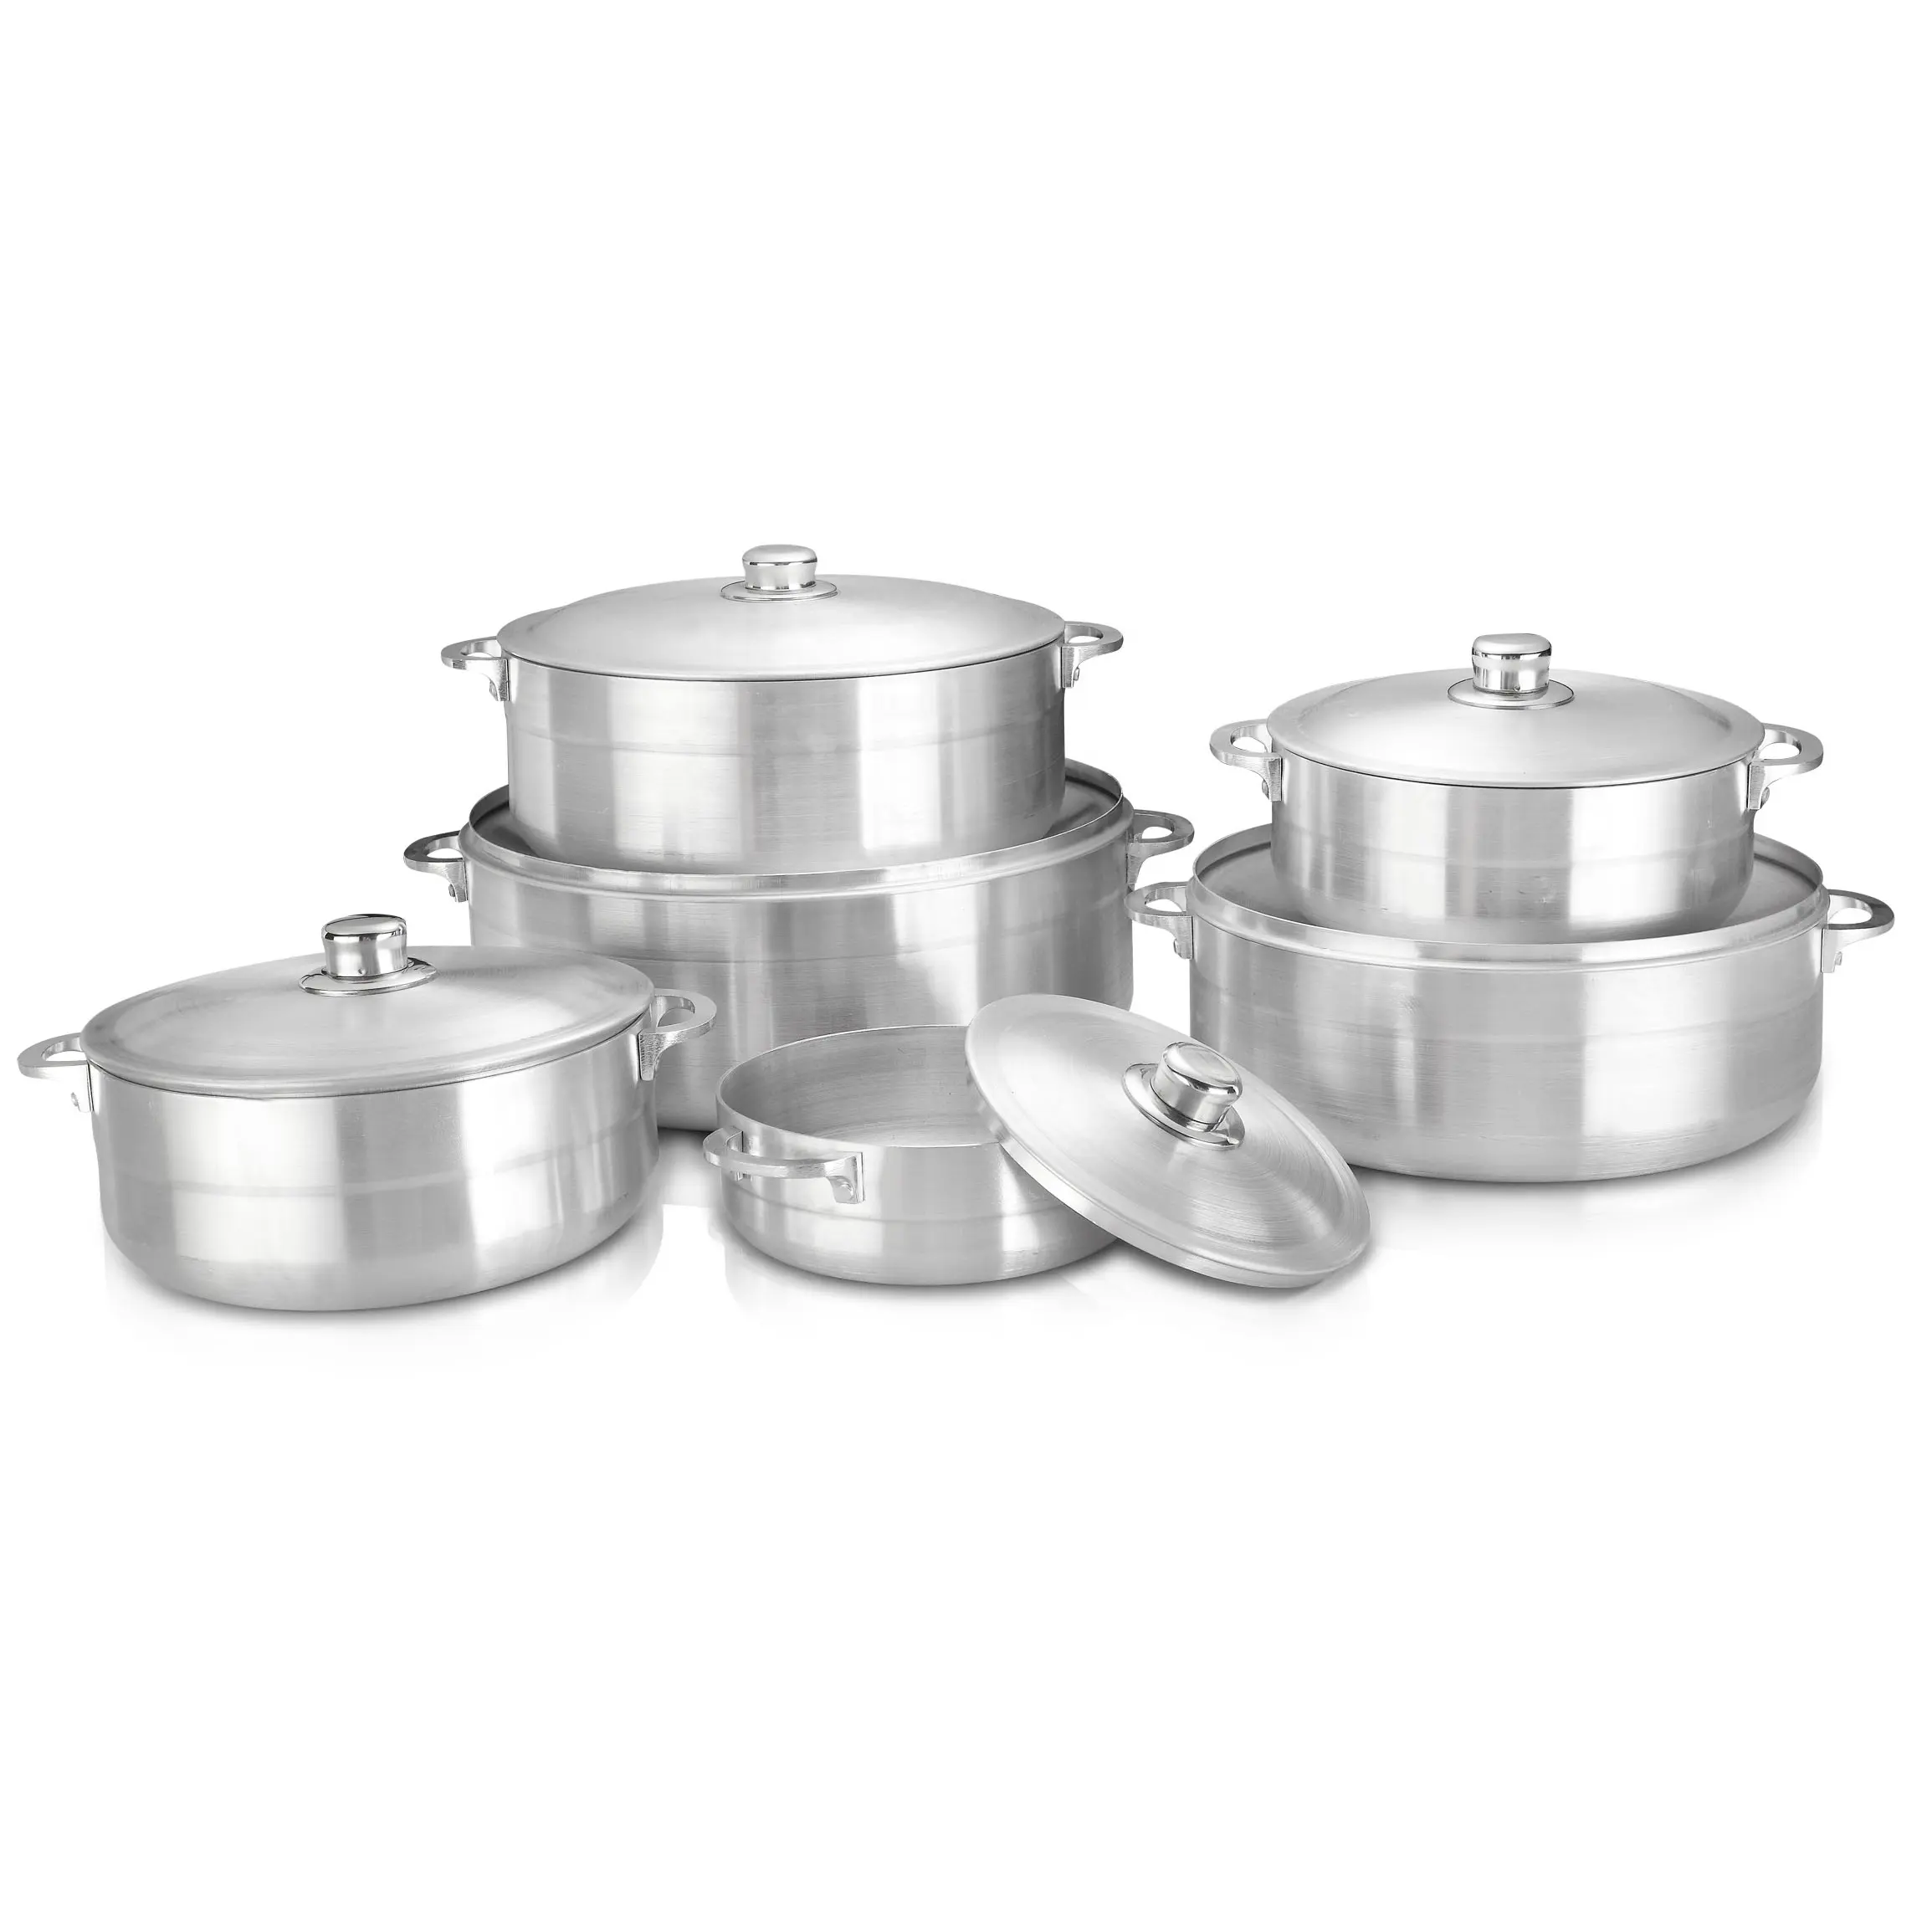 Best Selling casserole 12pcs pots Home cookware set Restaurants sanding pot aluminum caldero cooking pot sets